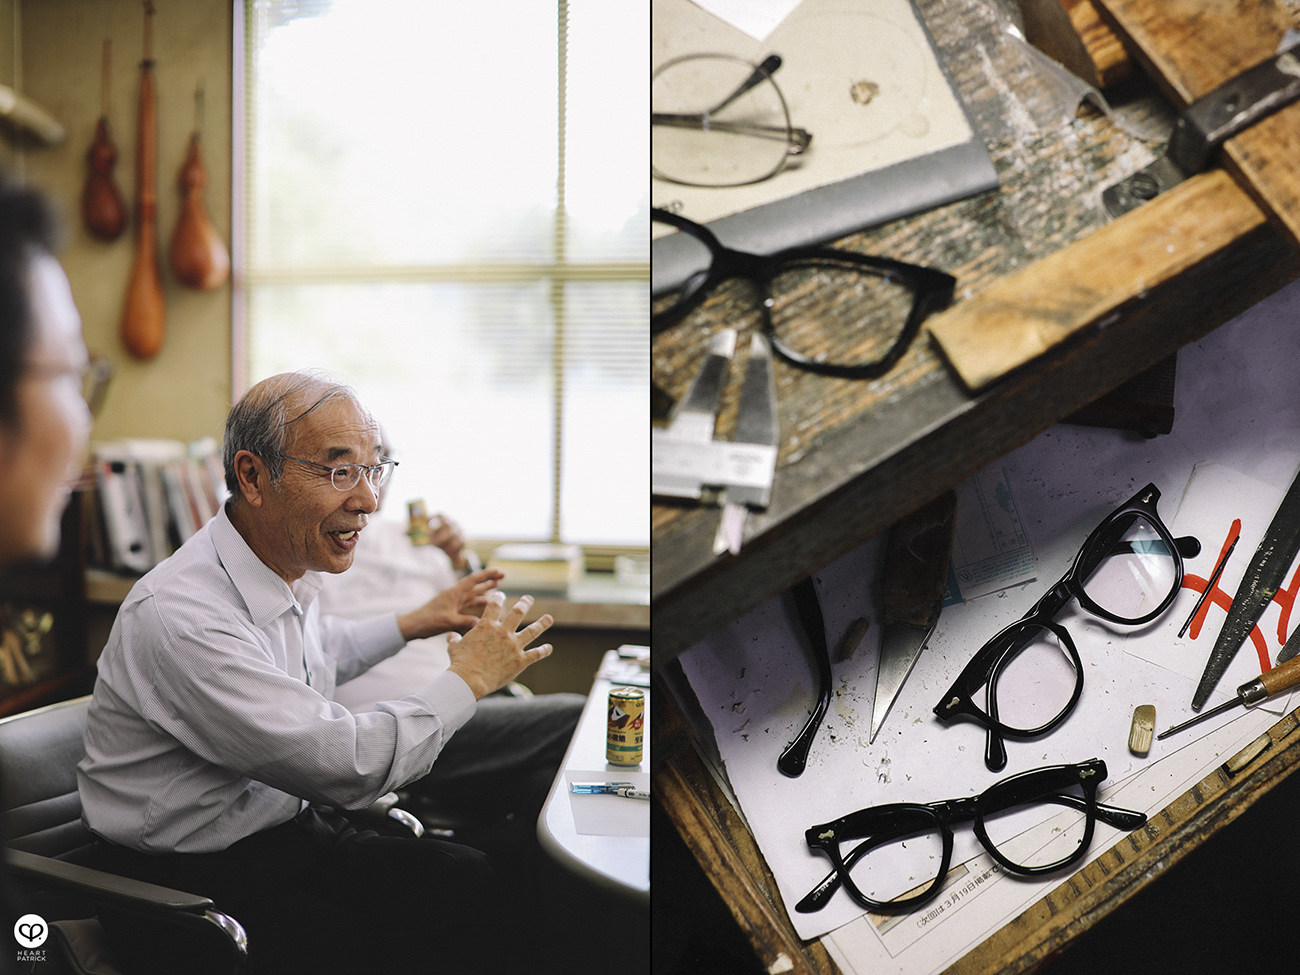 heartpatrick TVR true vintage revival handcrafted vintage eyewear from sabae japan